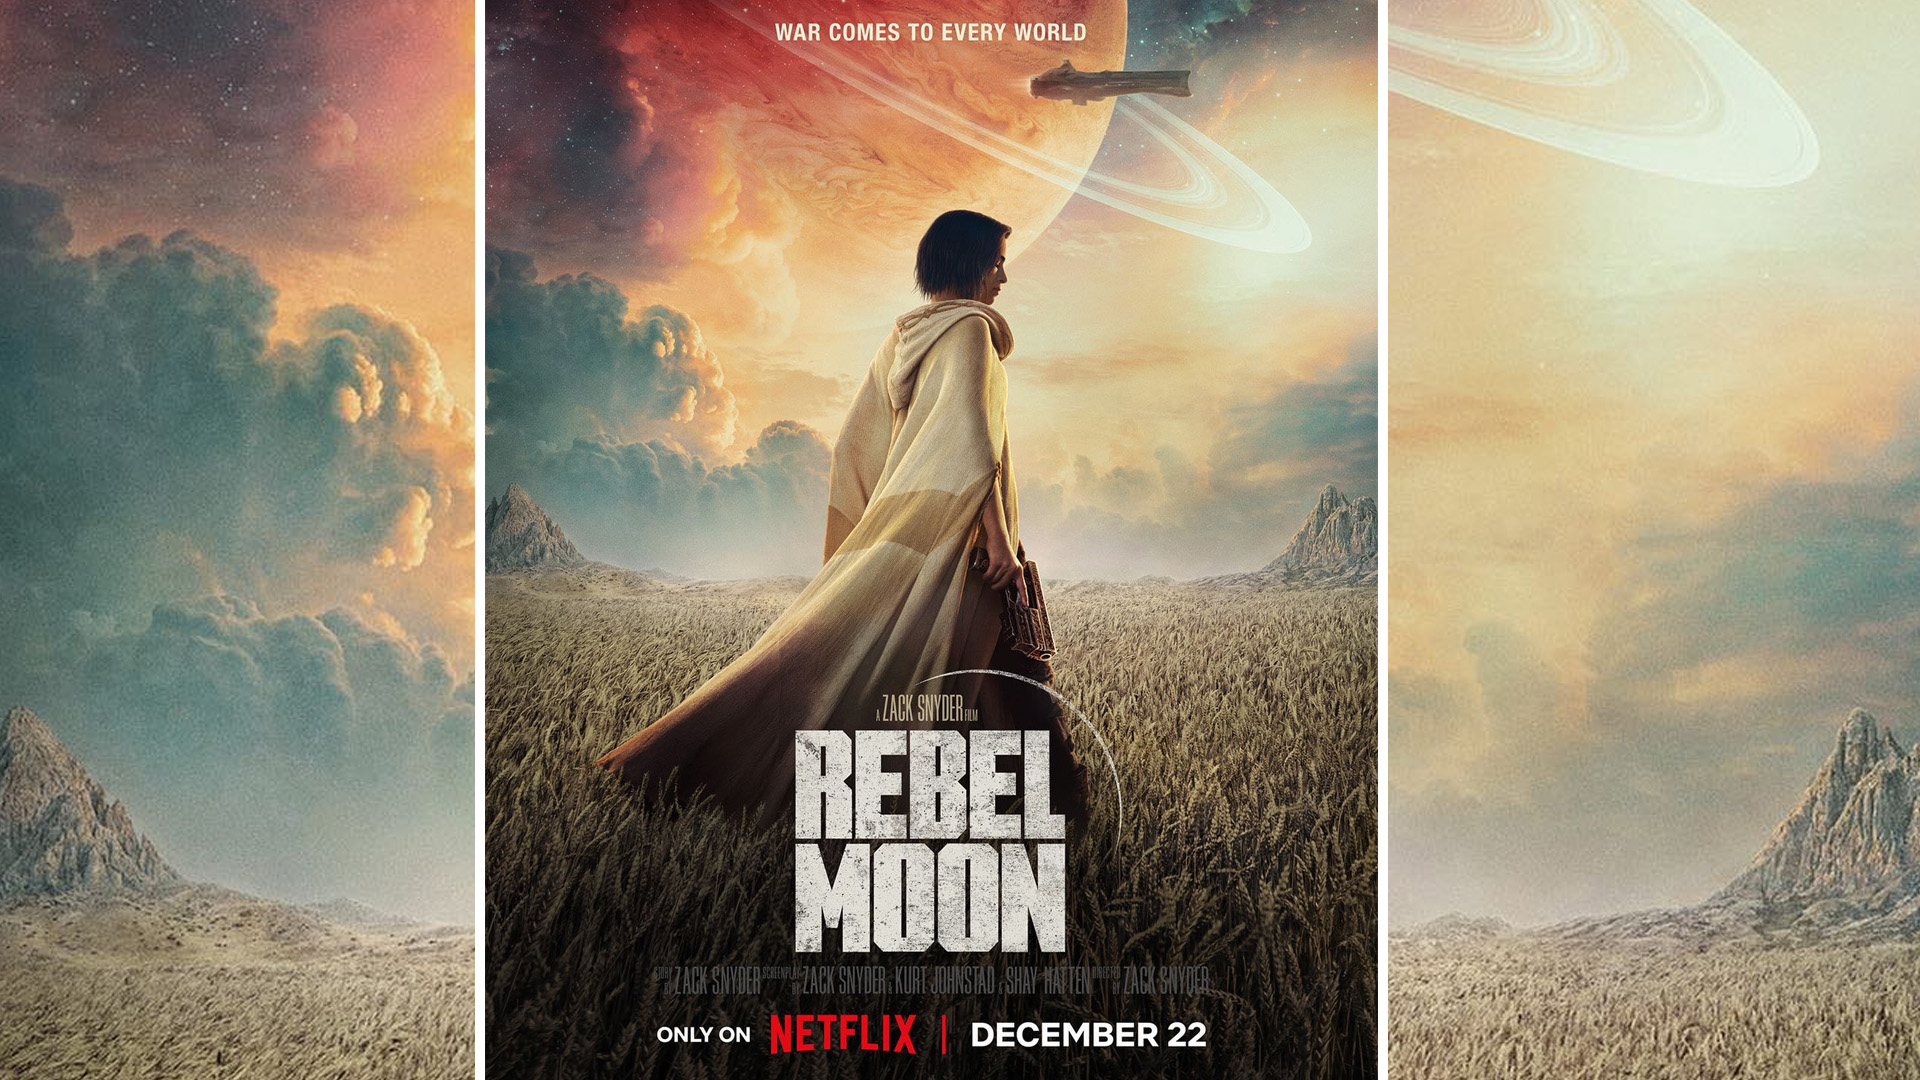 Rebel Moon Release Date When Is It Coming?